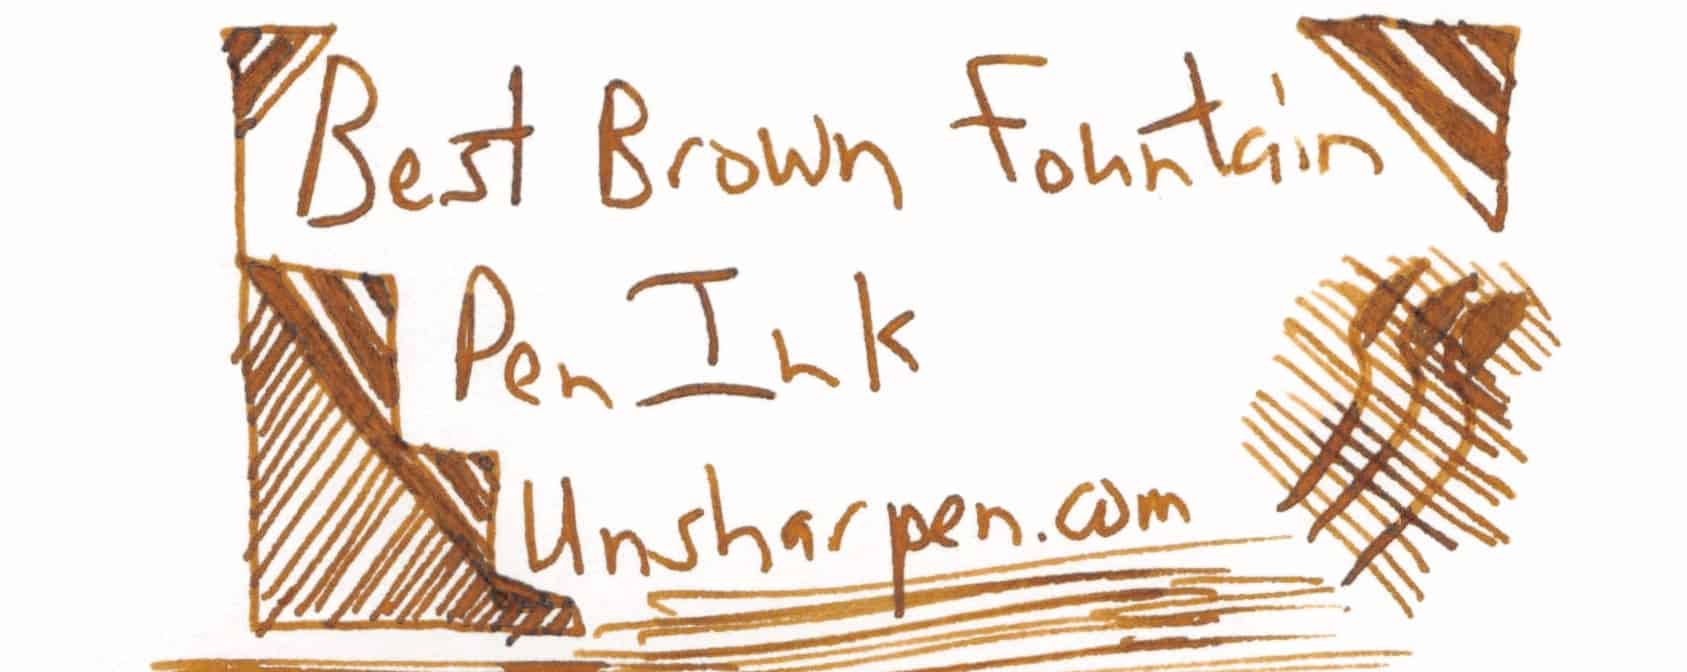 Noodler's Golden Brown: Ink Review - The Goulet Pen Company